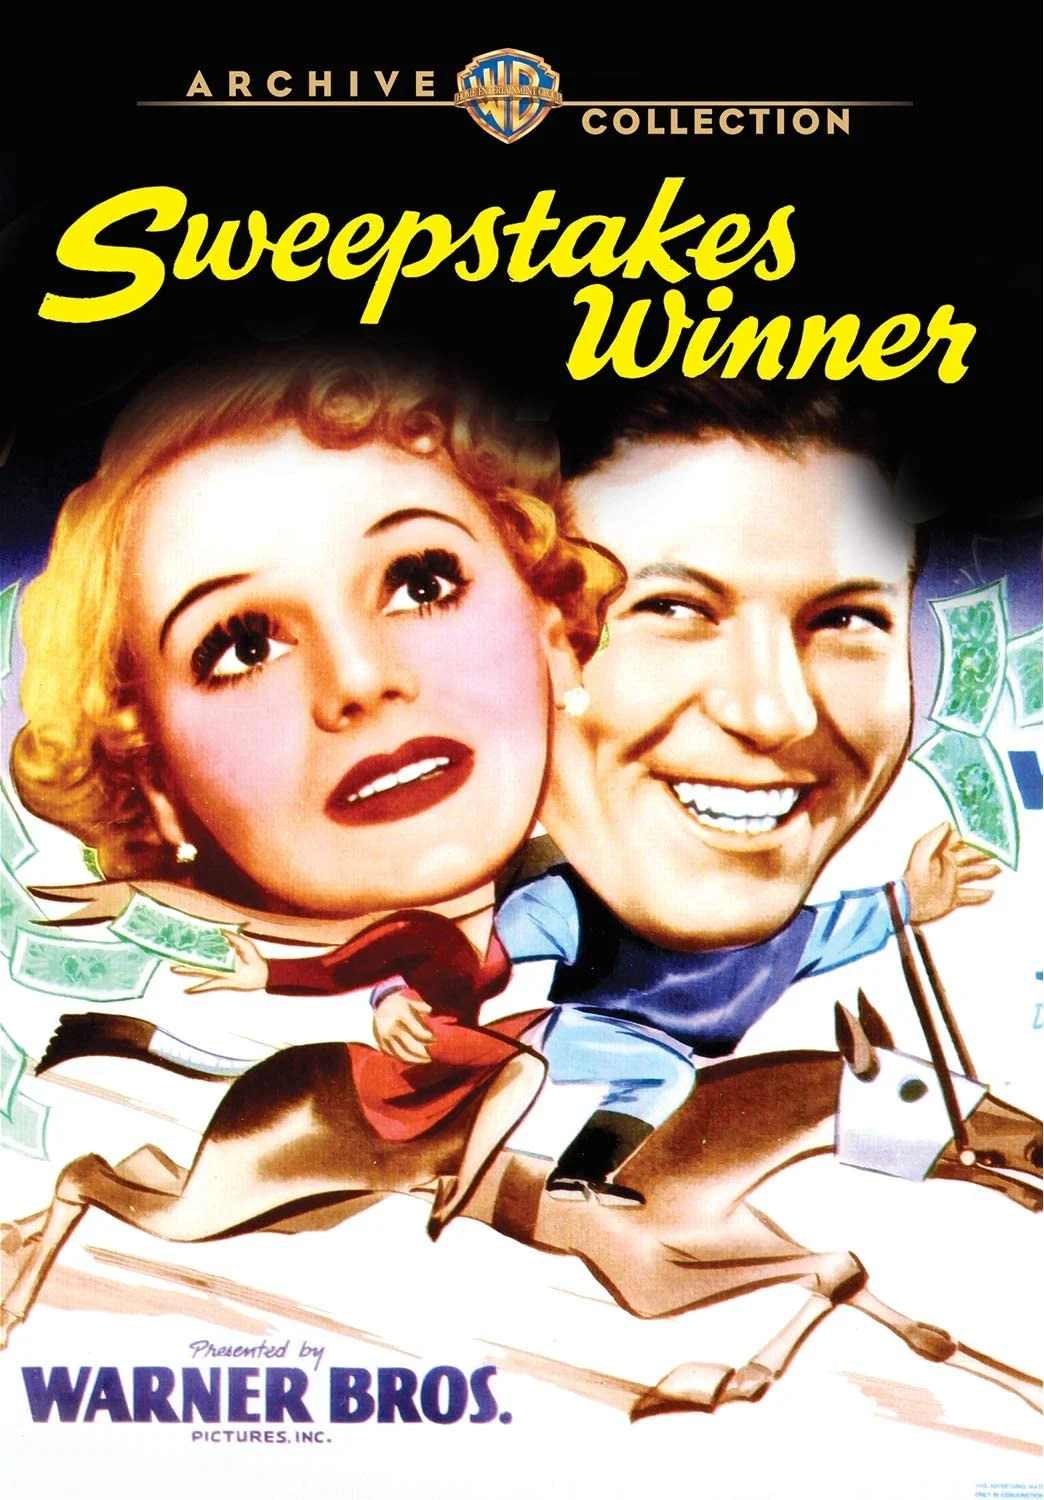 Sweepstakes Winner (DVD) (MOD) on MovieShack